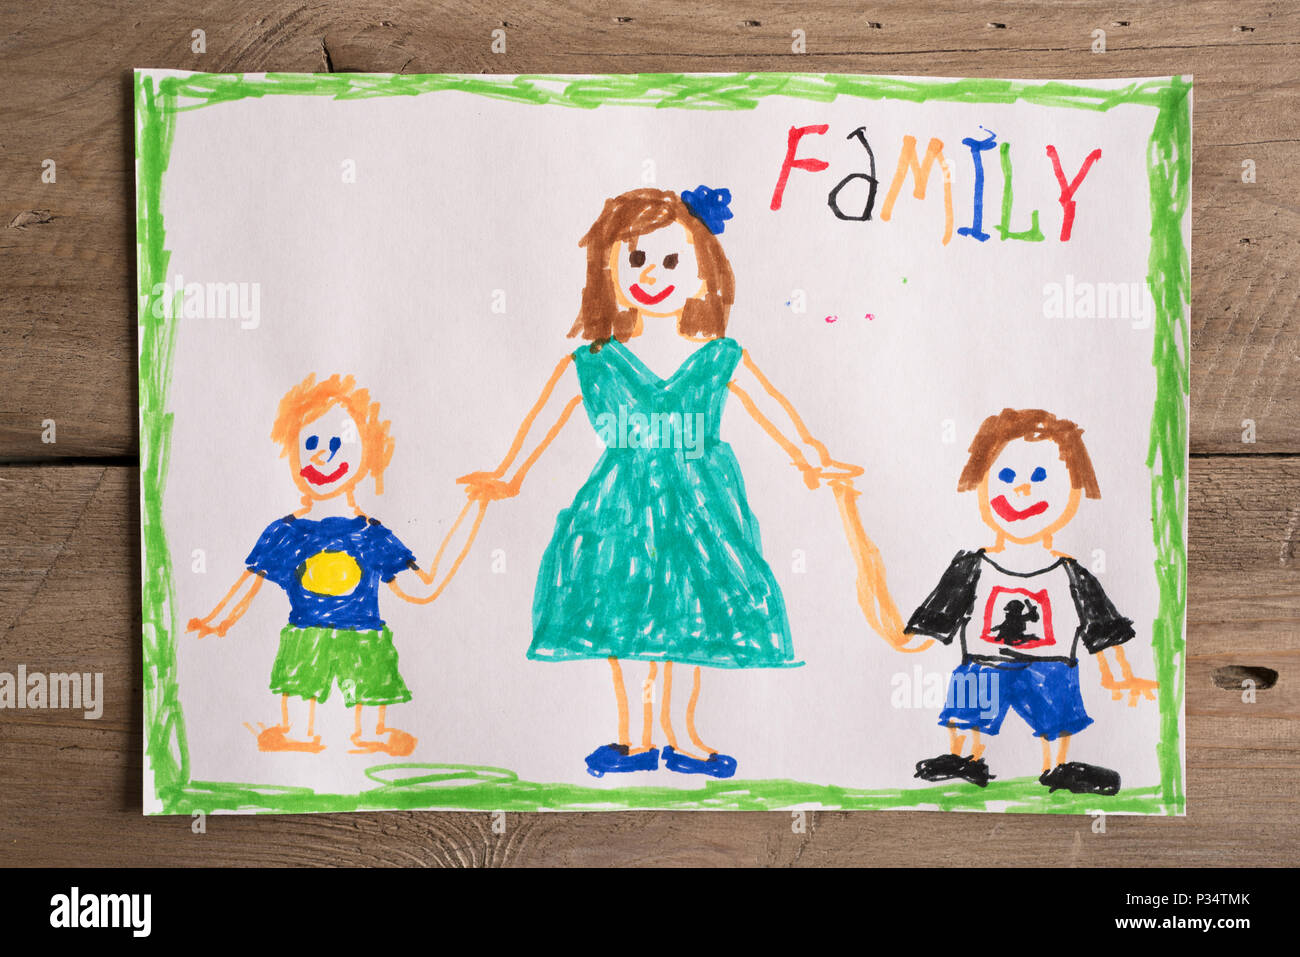 Dibujo infantil de familia y madre soltera de dos hijos. Concepto de familia incompleta. Foto de stock